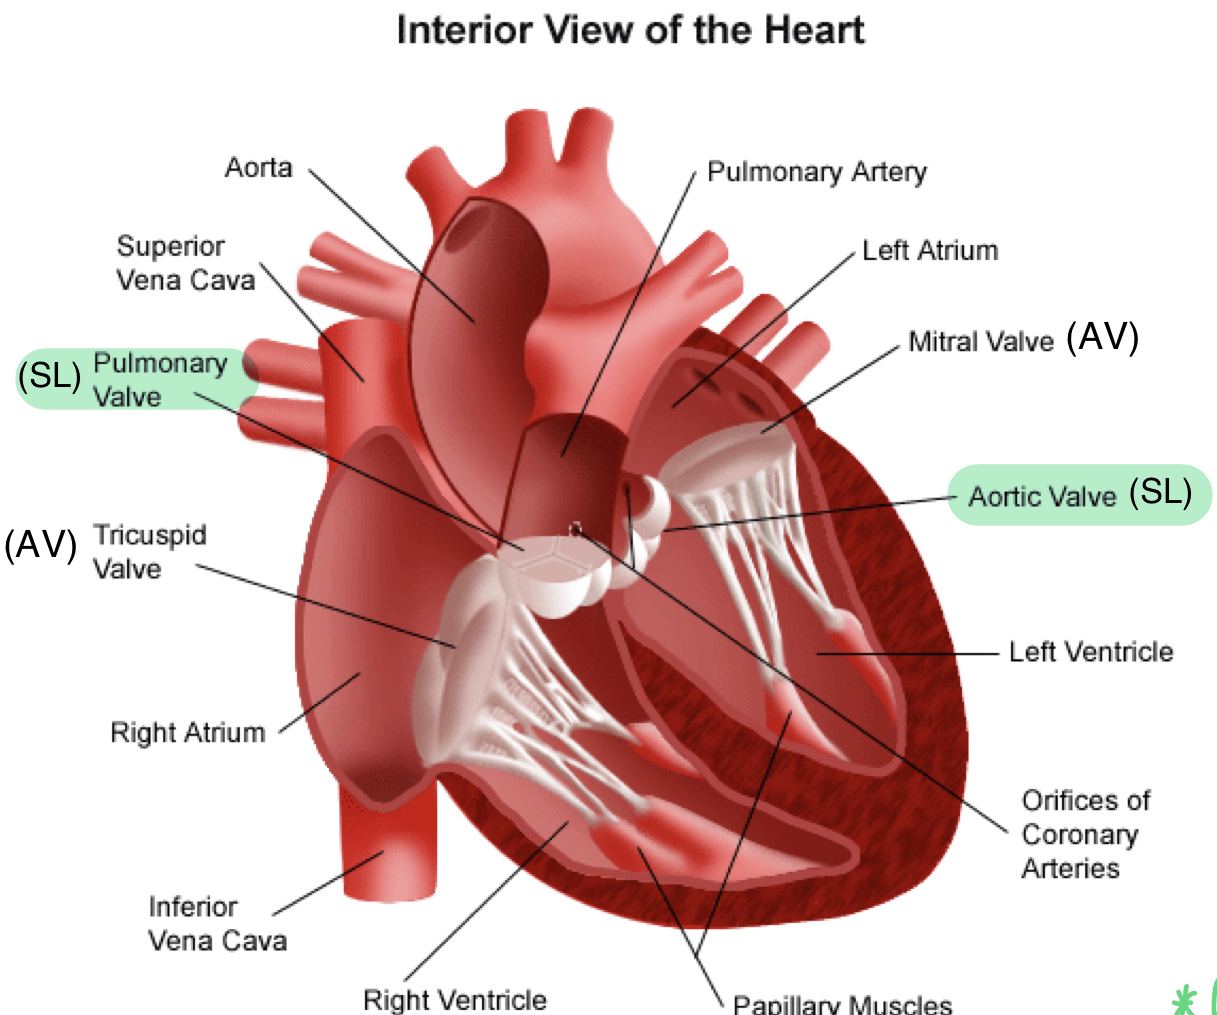 <ul><li><p>one-way valves at the base of major arteries pulmonary valve (between right ventricle and pulmonary artery) and aortic valve (between left ventricle and aorta)</p></li><li><p>make &quot;DUB&quot; sound when closing</p></li></ul>